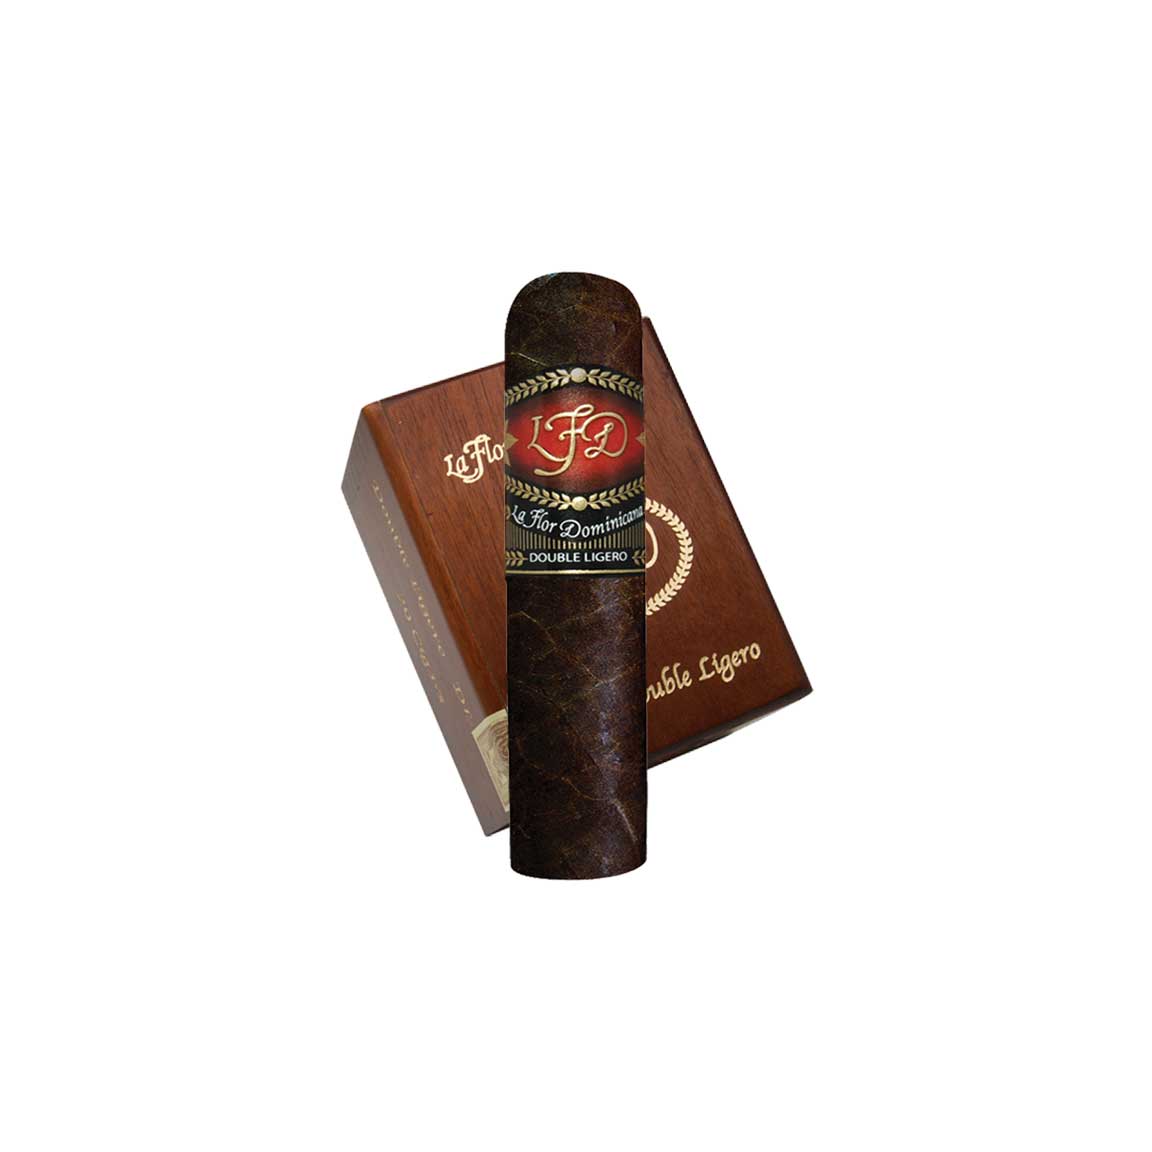 LFD DL-660 (4.62x60 / Box of 20) - Hiland's Cigars